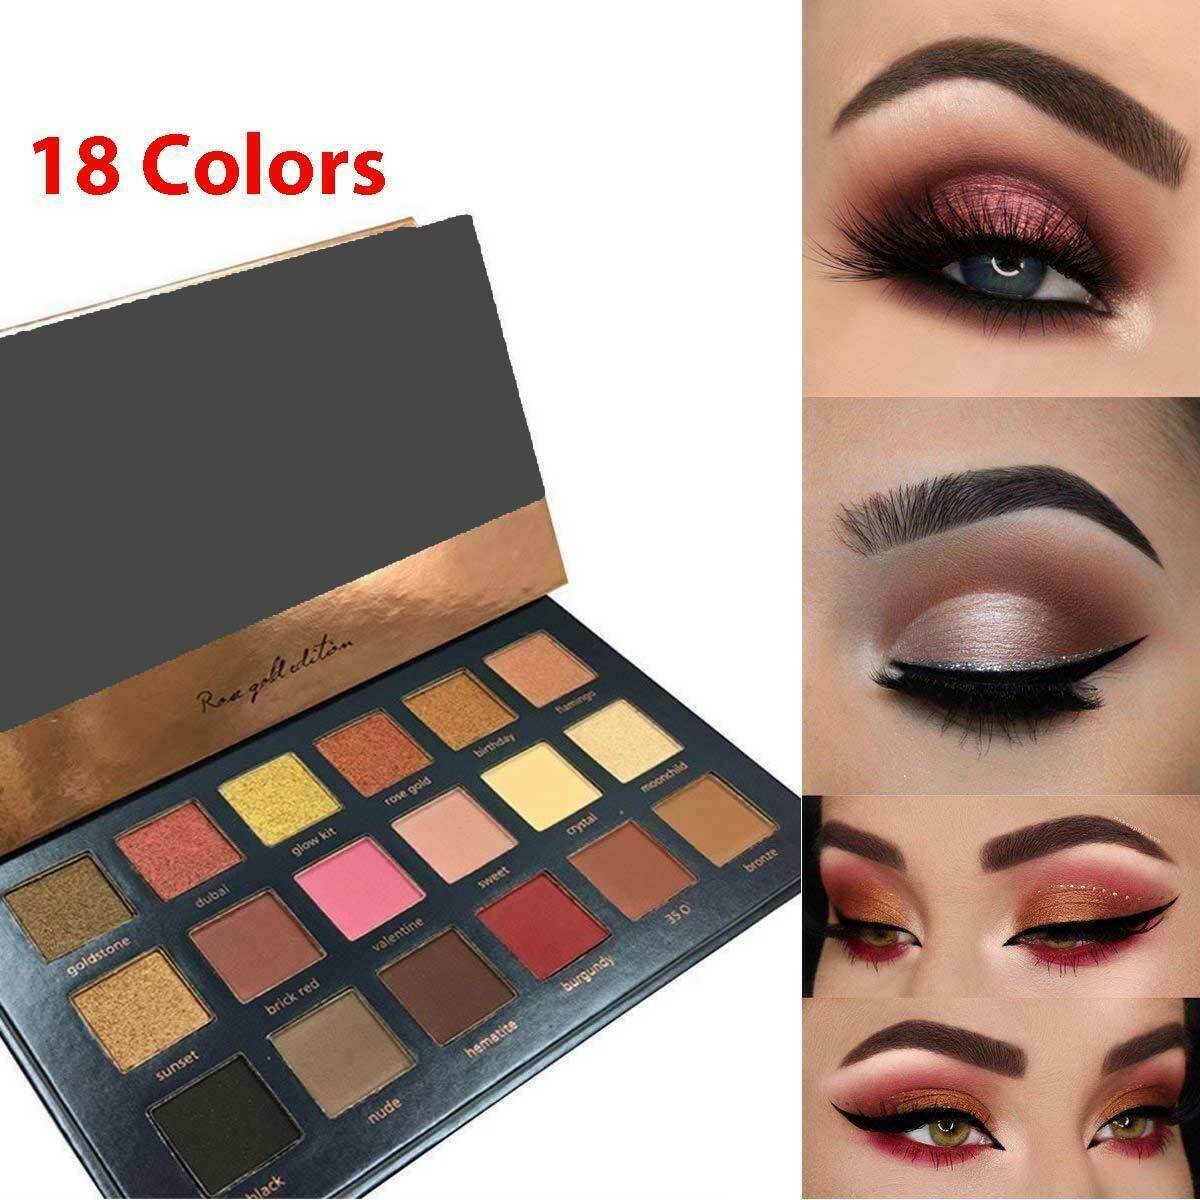 18 Colors Eyeshadow Palette Matte Powder Eye Shadow Makeup Shimmer Pro Kit Set